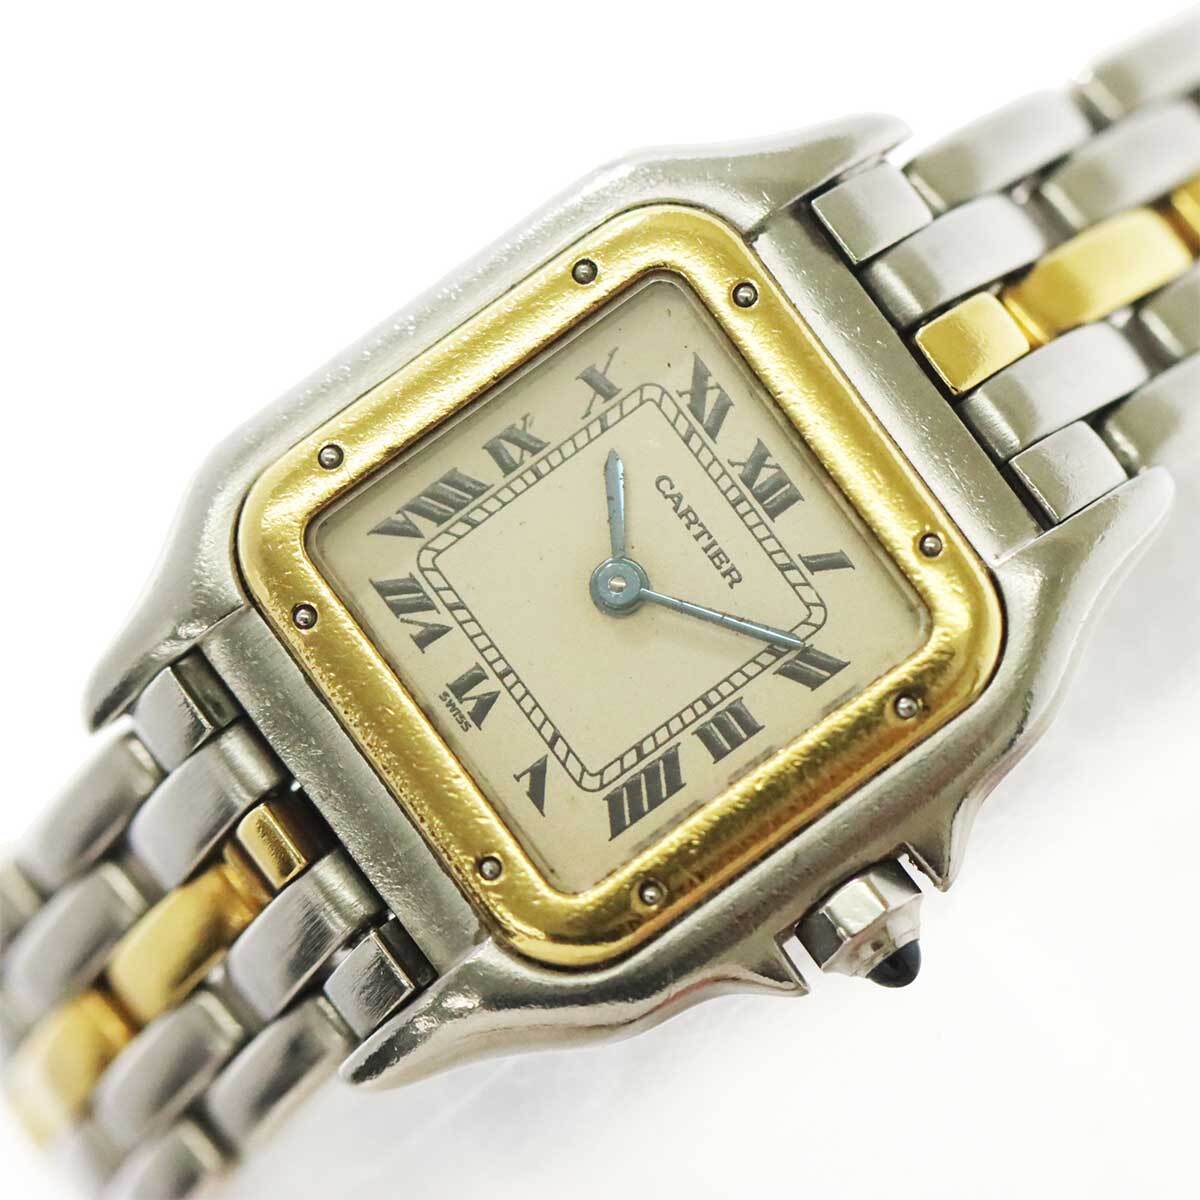  Cartier Cartier bread tail 1 low SM combination lady's wristwatch ivory face K18YG quartz Panthere 90229115